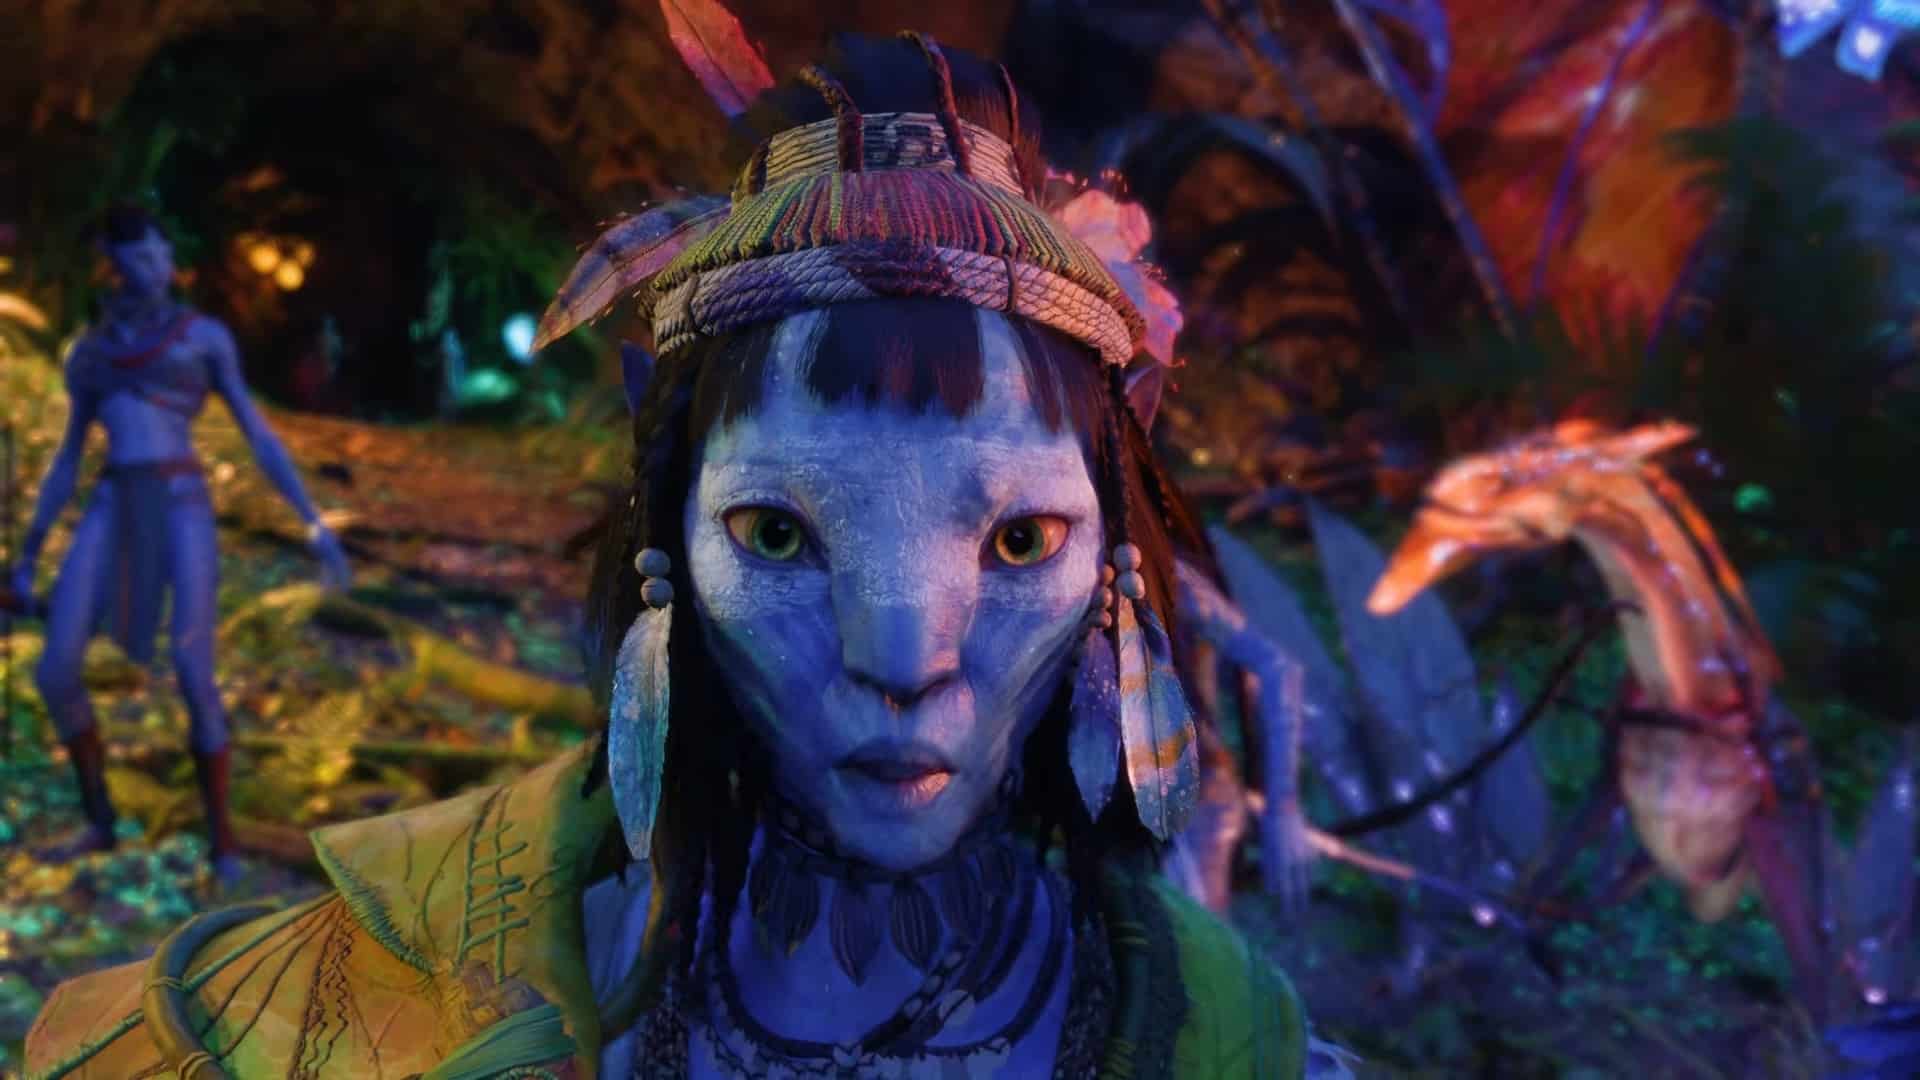 Avatar : Frontiers of Pandora - Jeu Xbox Series X - Cdiscount Jeux